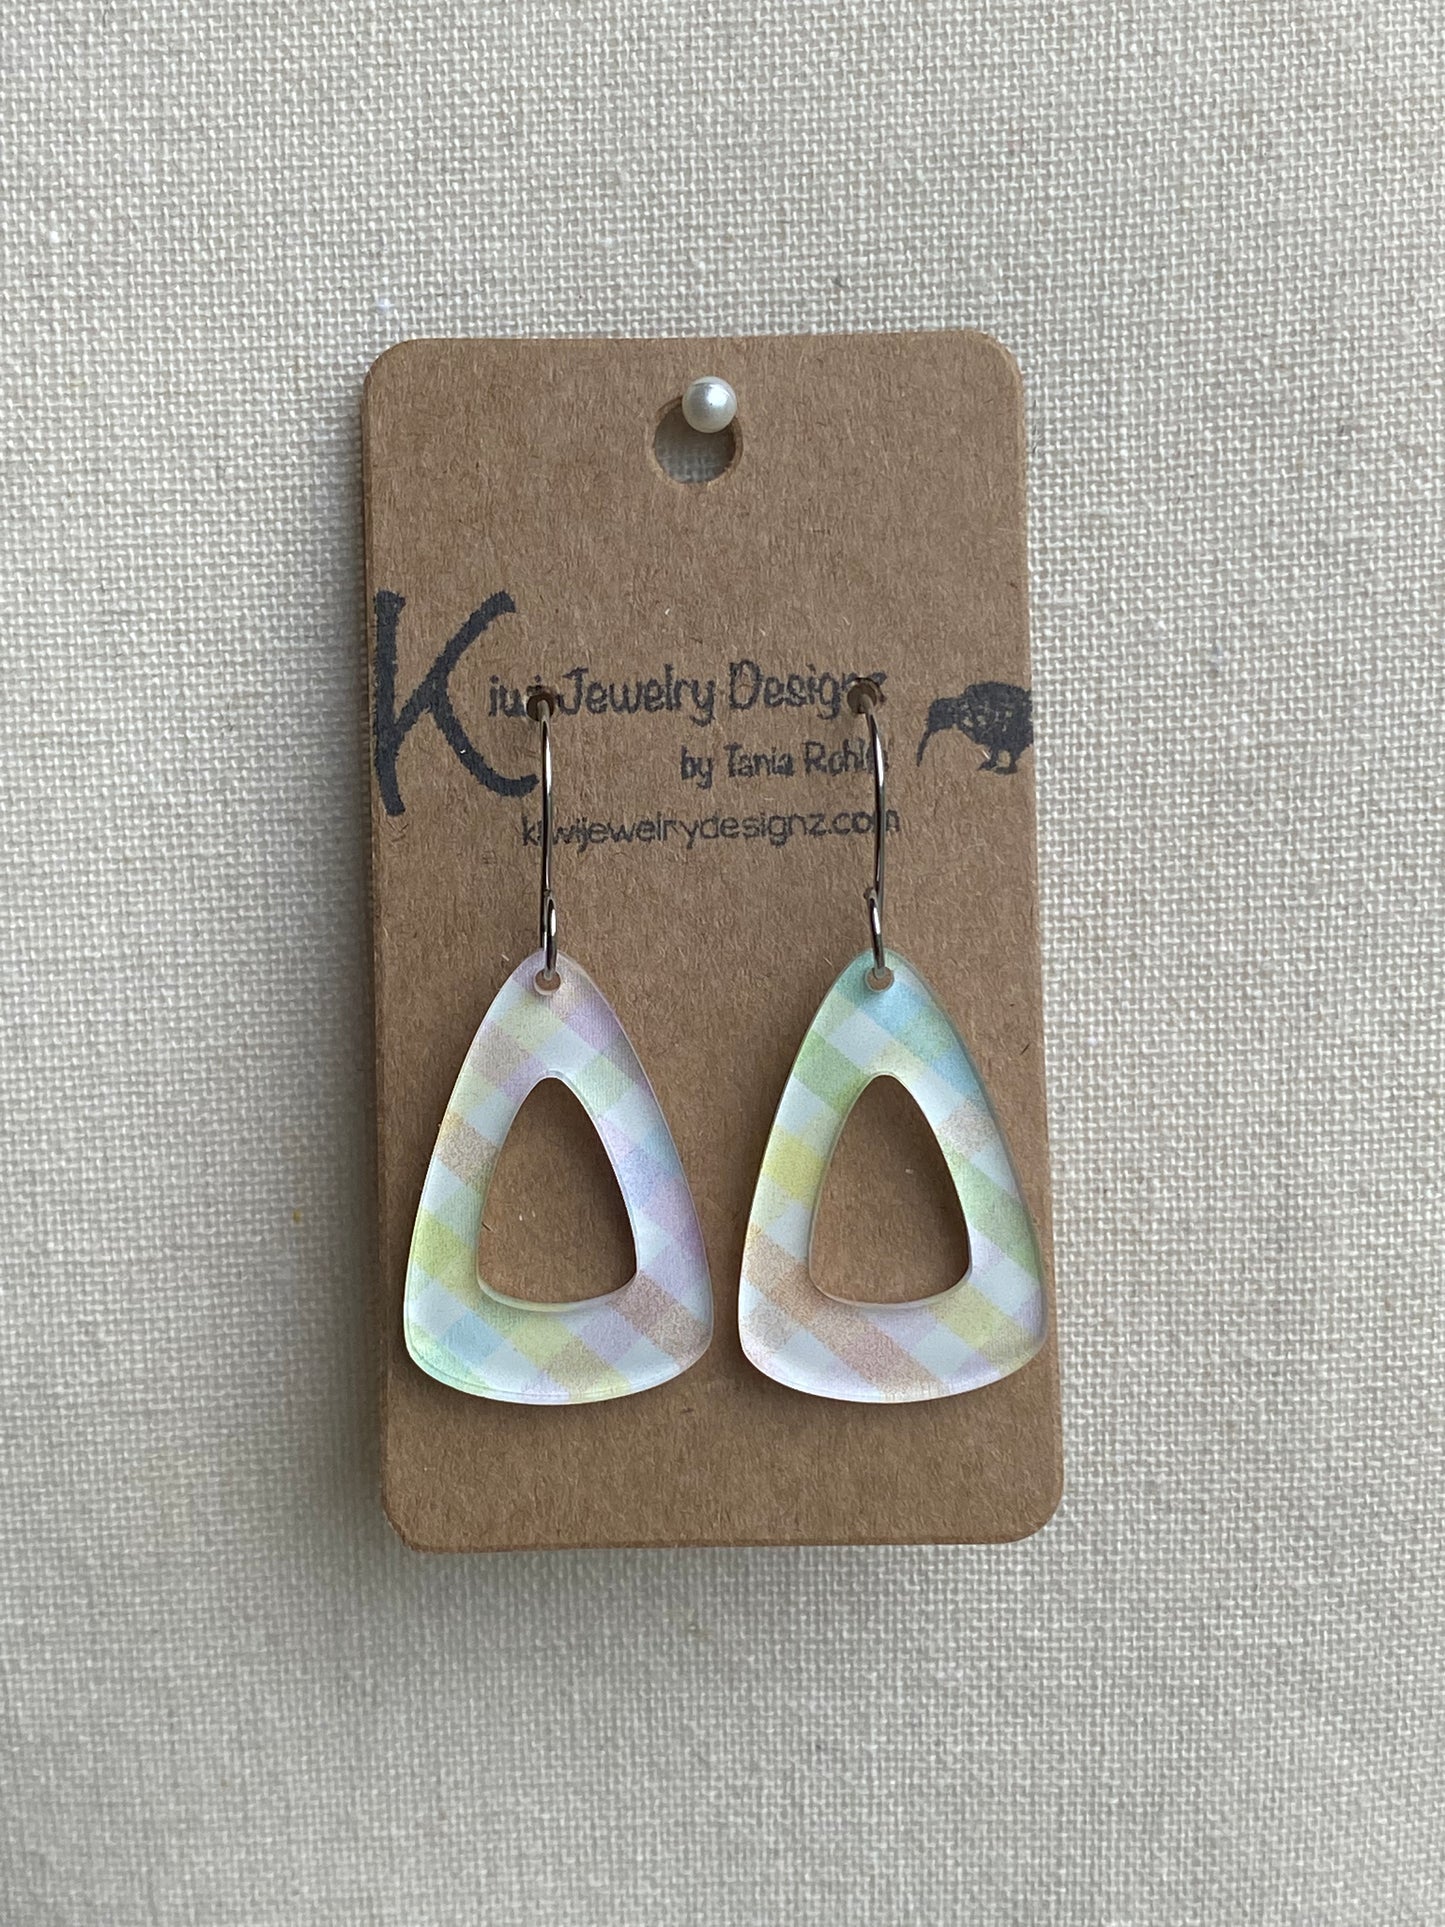 Kiwi Jewelry Designz - Acrylic Earrings